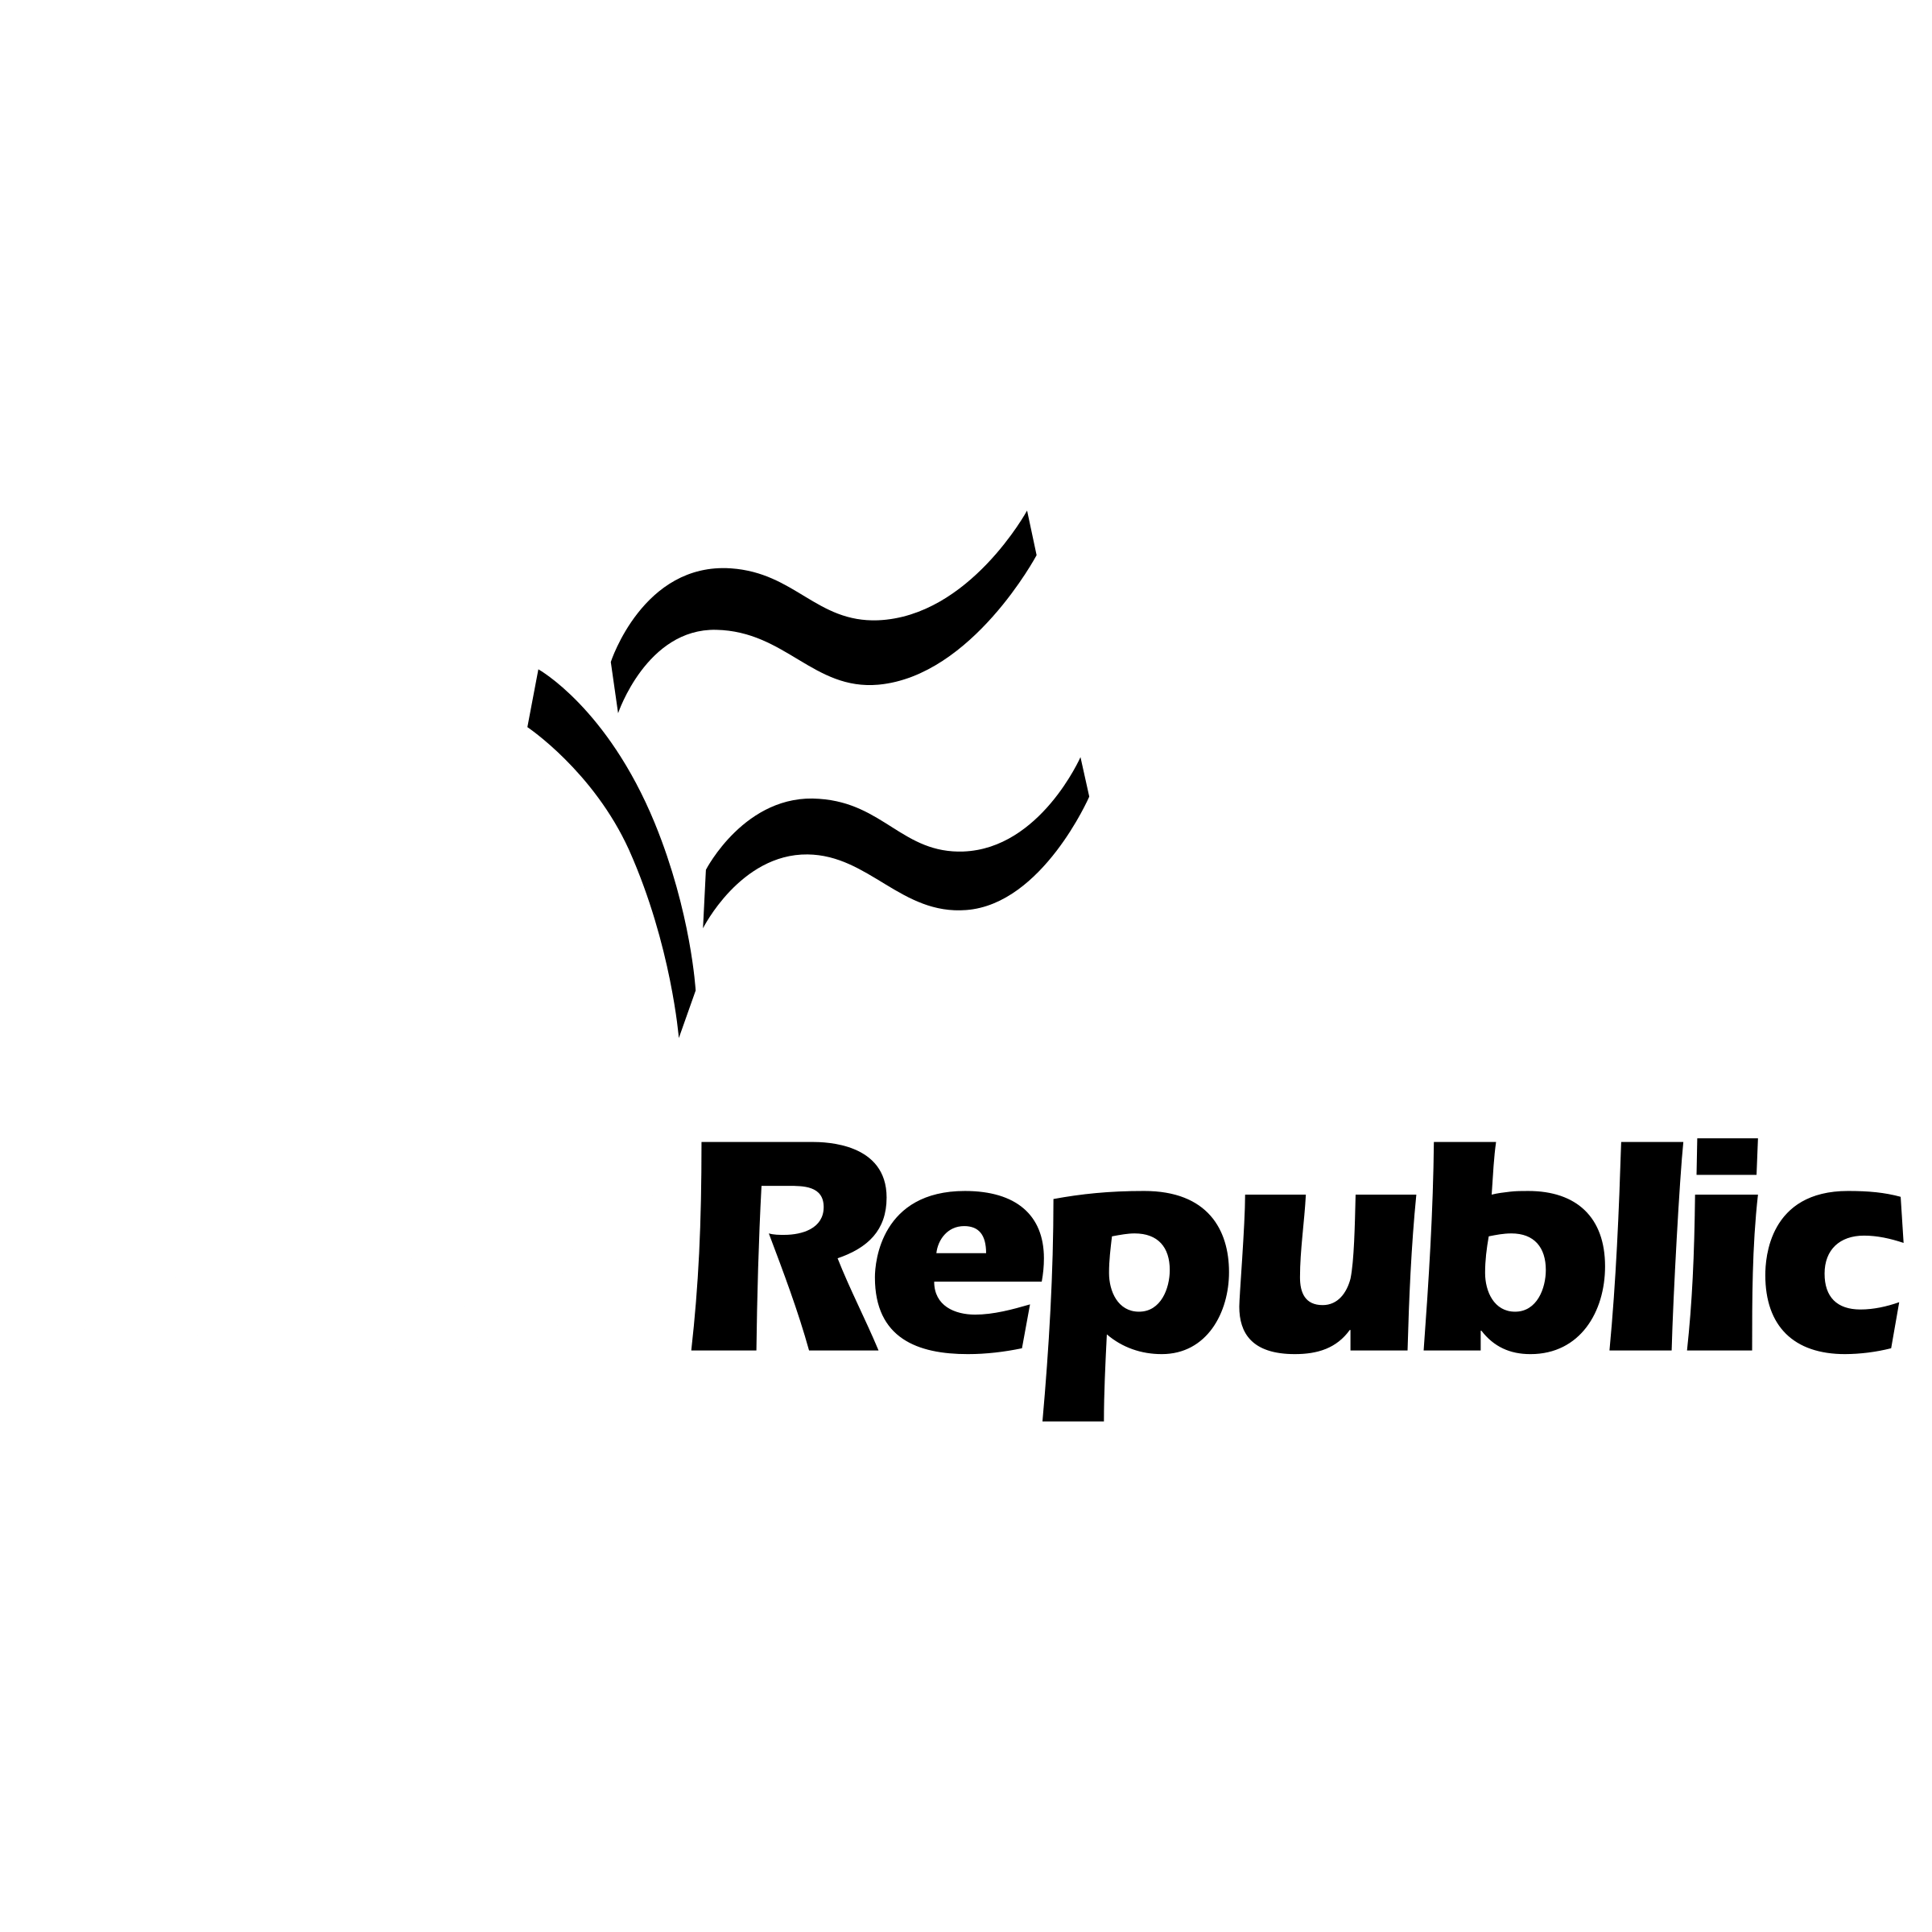 TechRepublic Logo - TechRepublic Logo PNG Transparent & SVG Vector - Freebie Supply